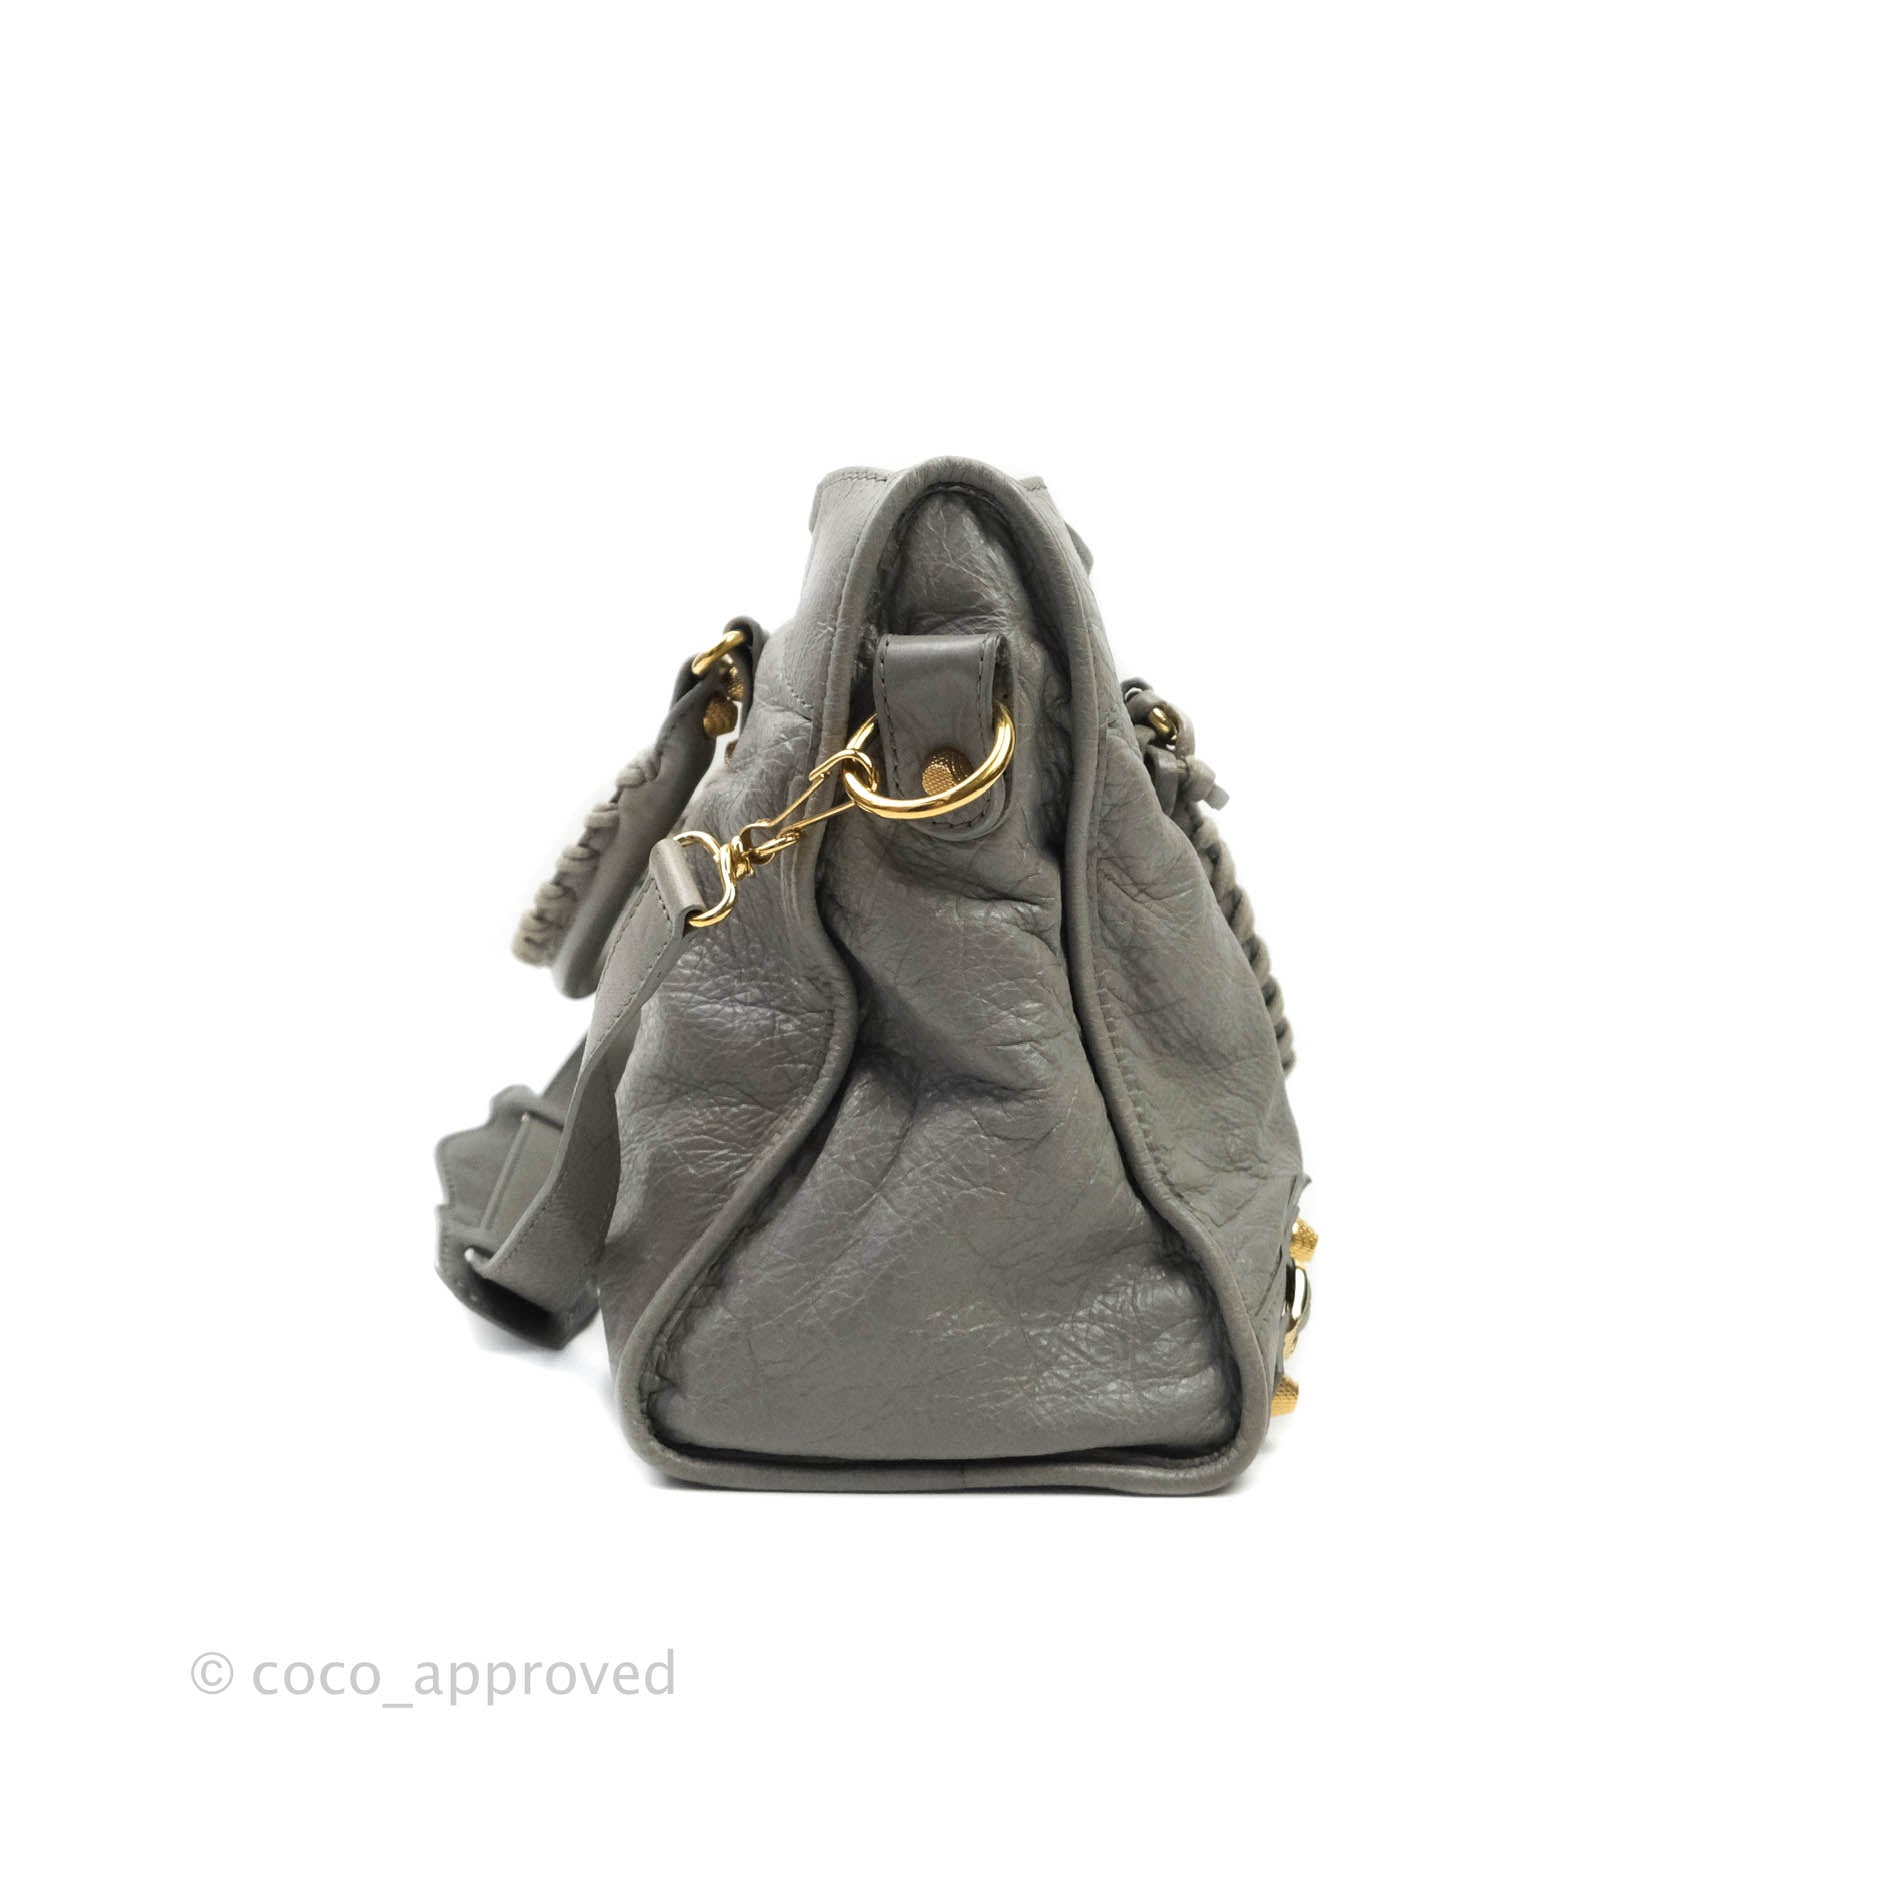 Authentic LV Irene limited edition bag  Limited edition bag, Bags,  Balenciaga city bag